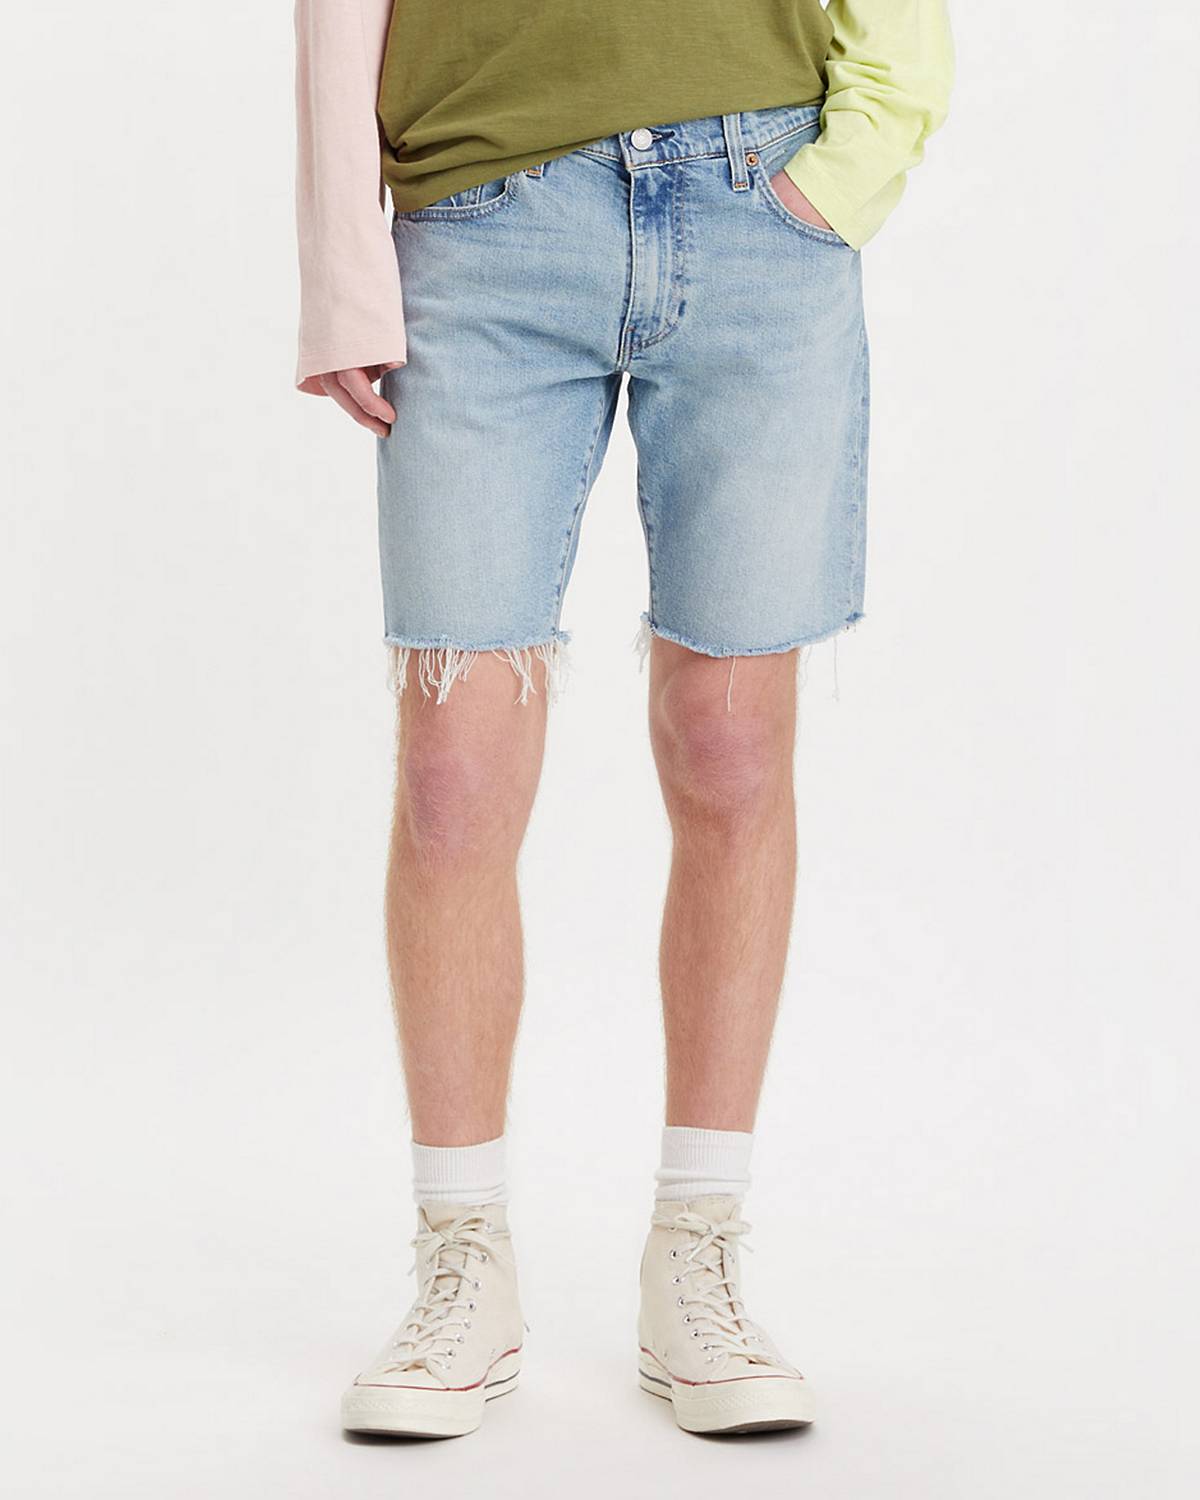 Model wearing denim slim fit shorts.